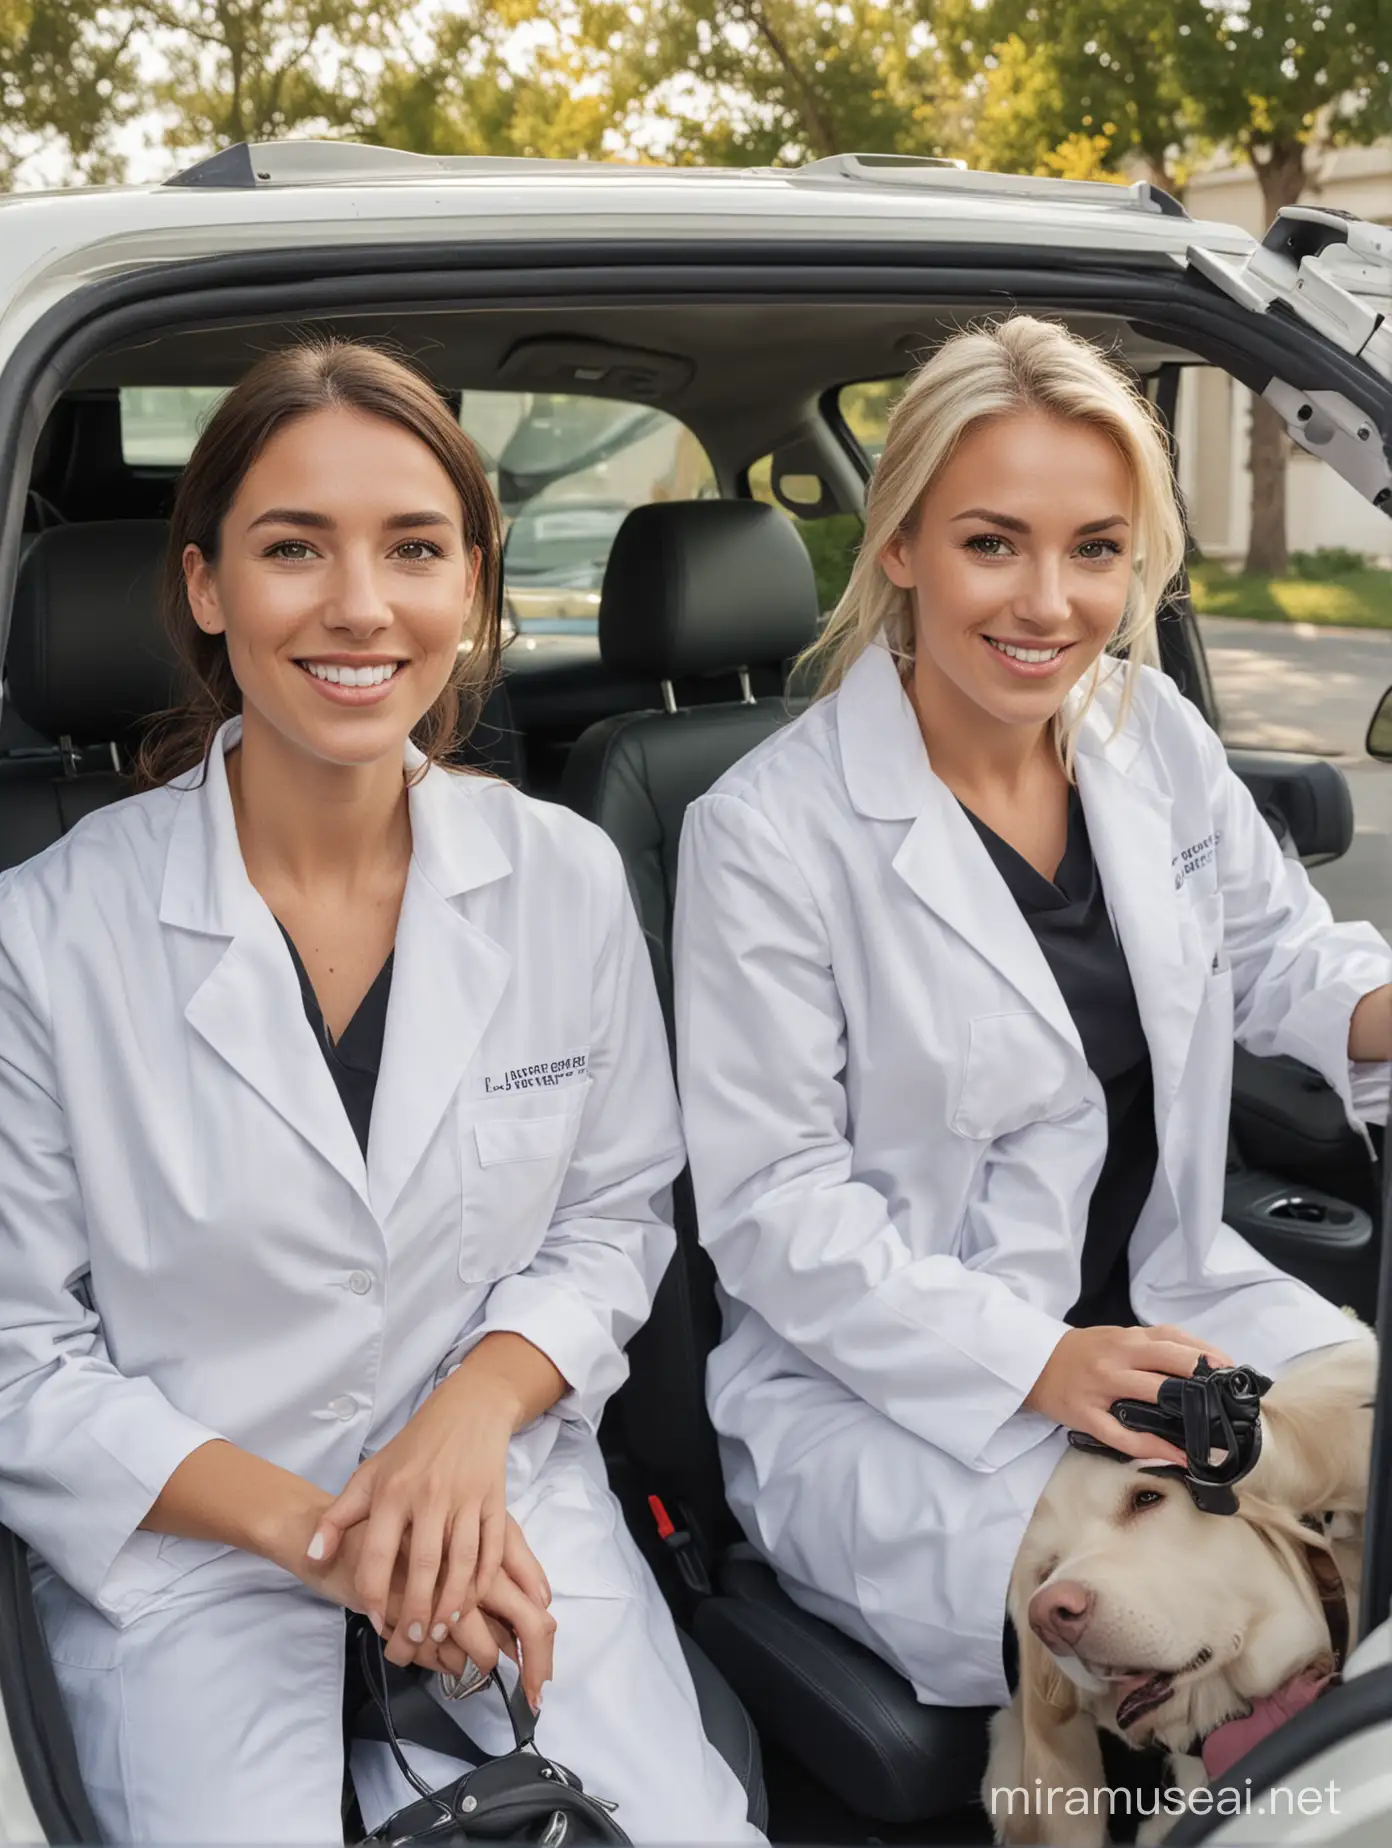 Lab CoatClad Women in Car Science Meets Road Trip